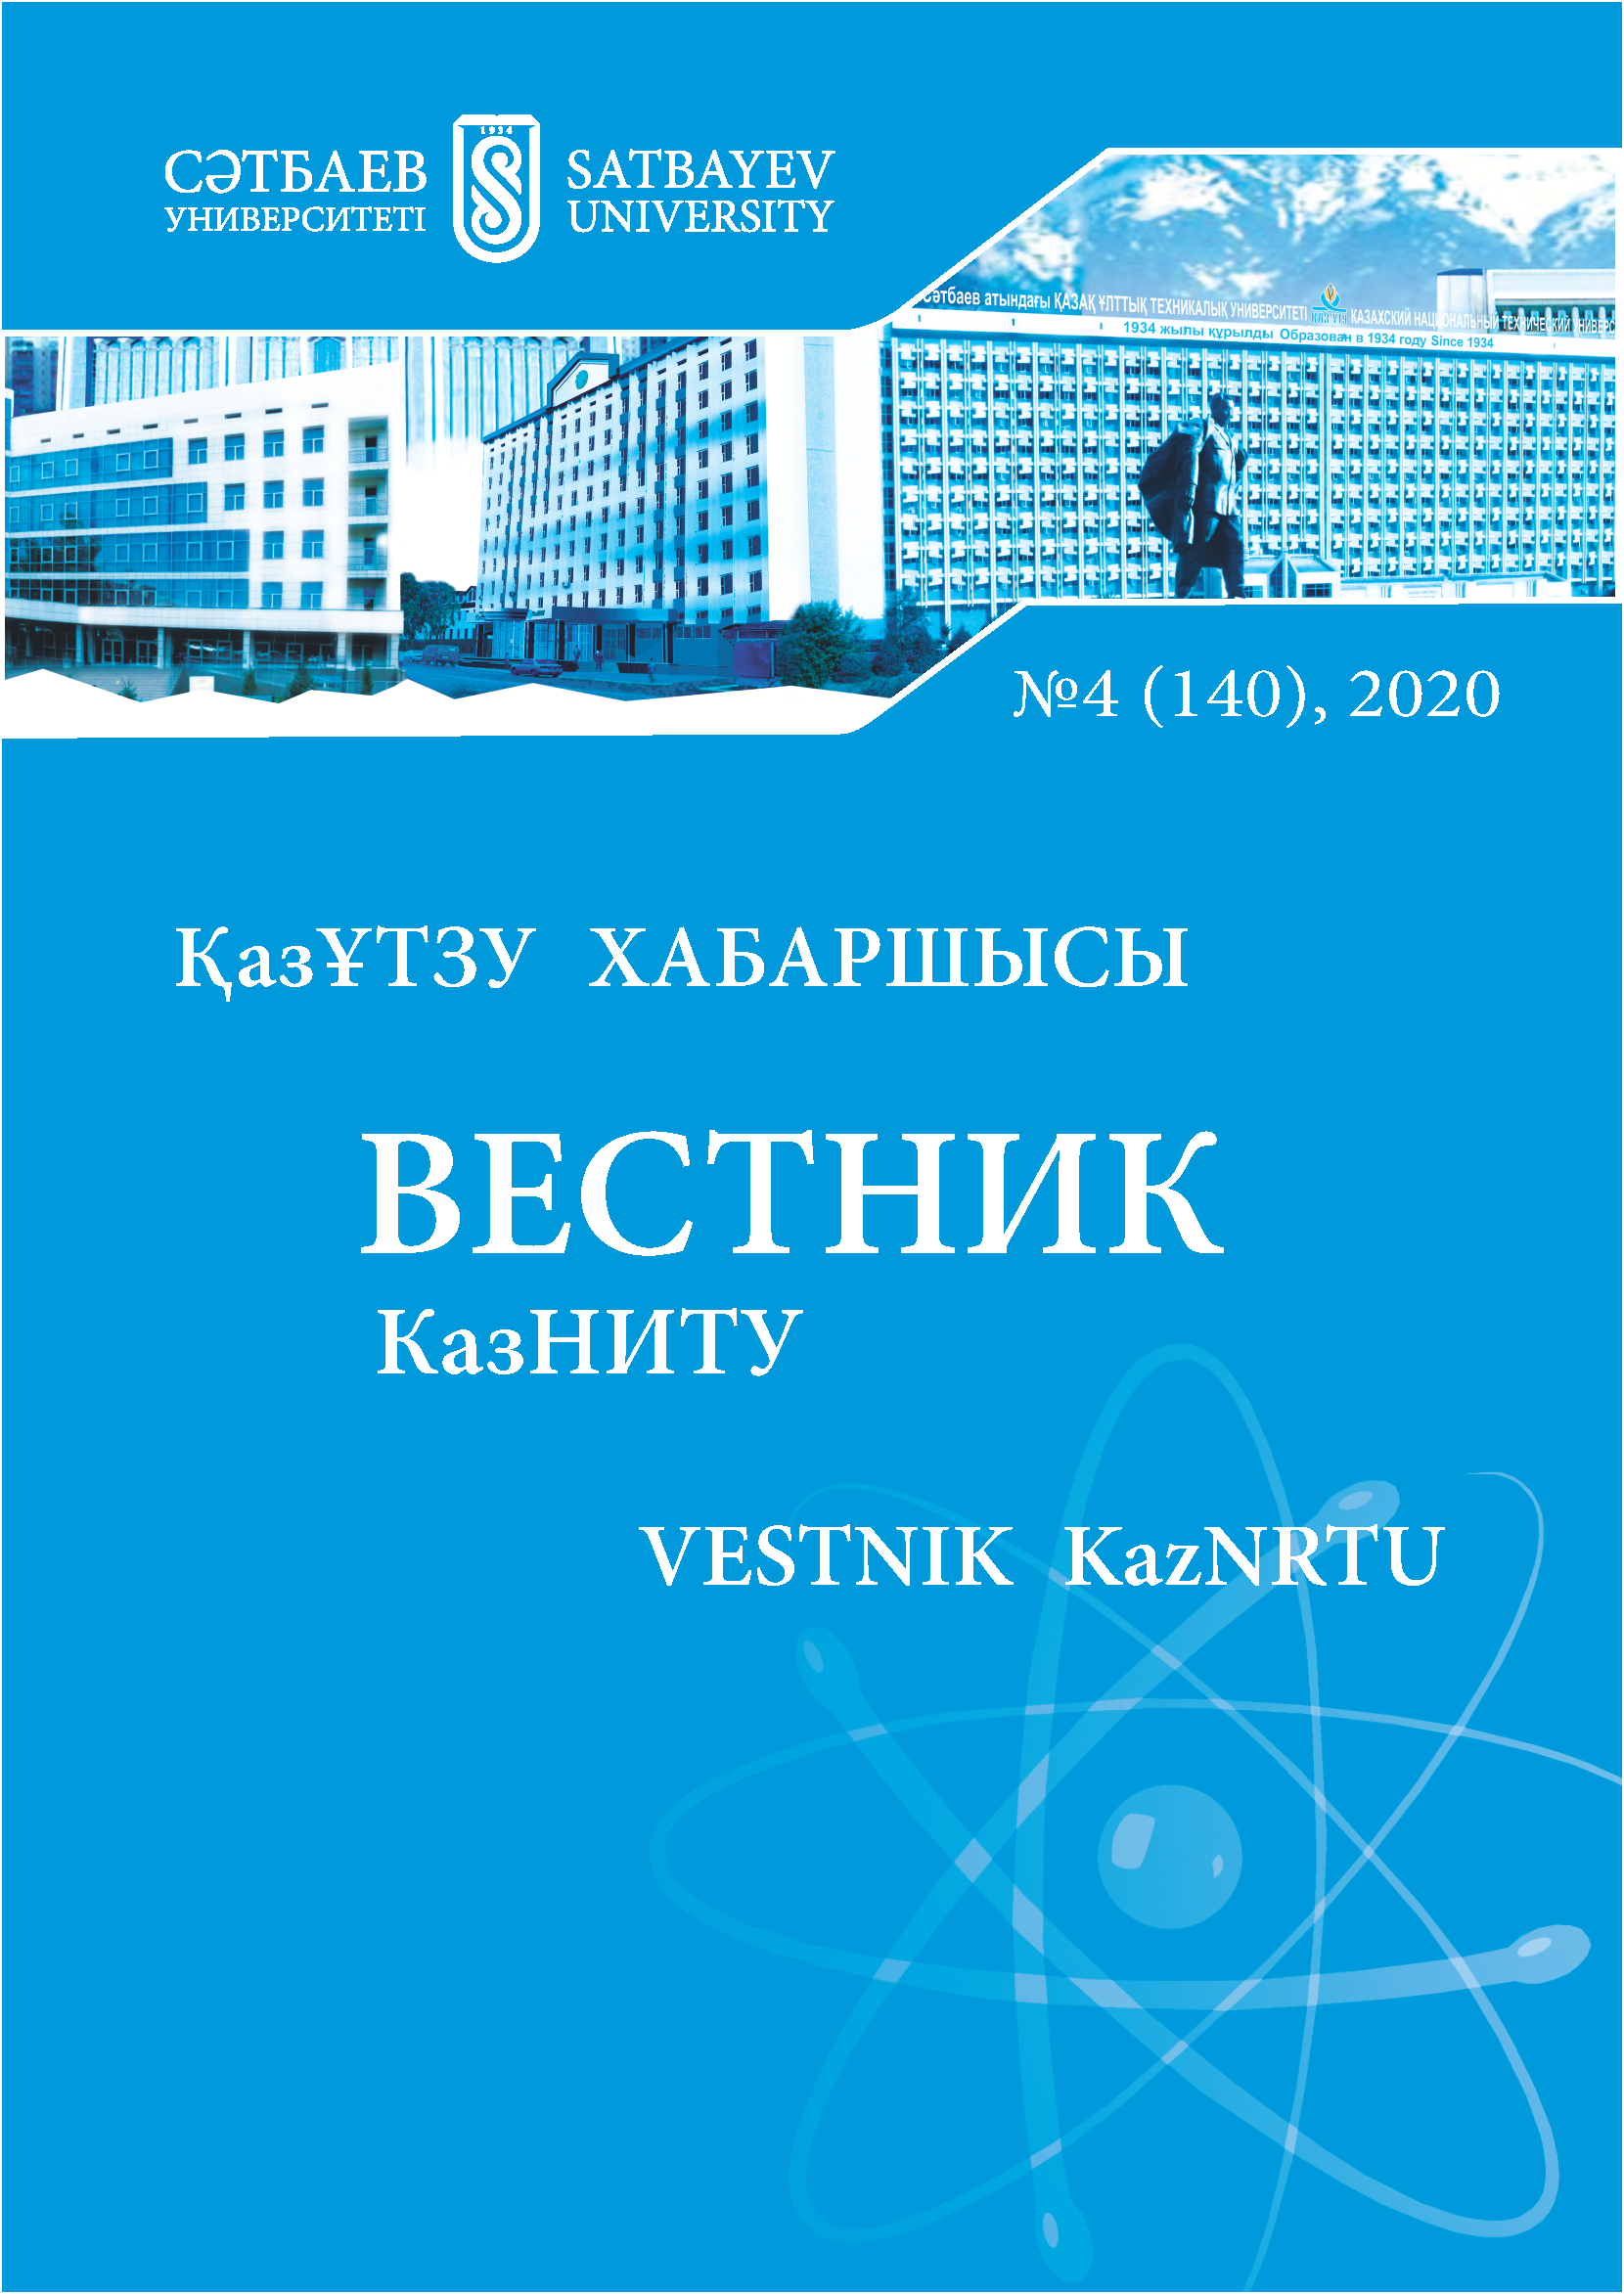 					View Vol. 140 No. 4 (2020): Vestnik KazNRTU
				